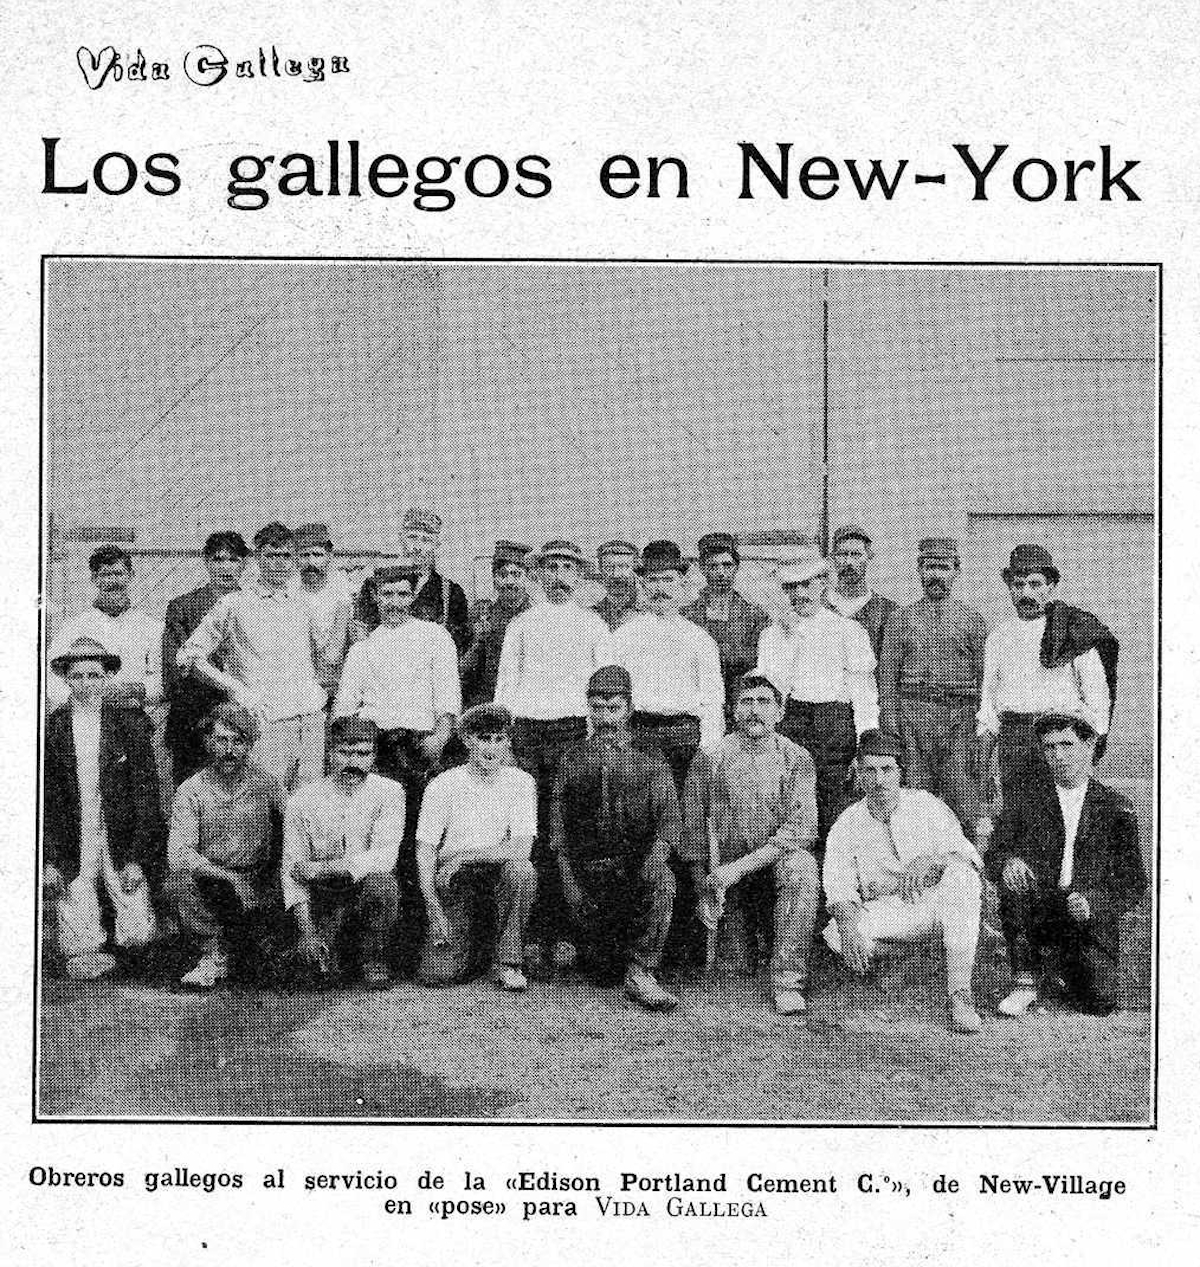 Galician workers in New York (Vida gallega, May 1910)